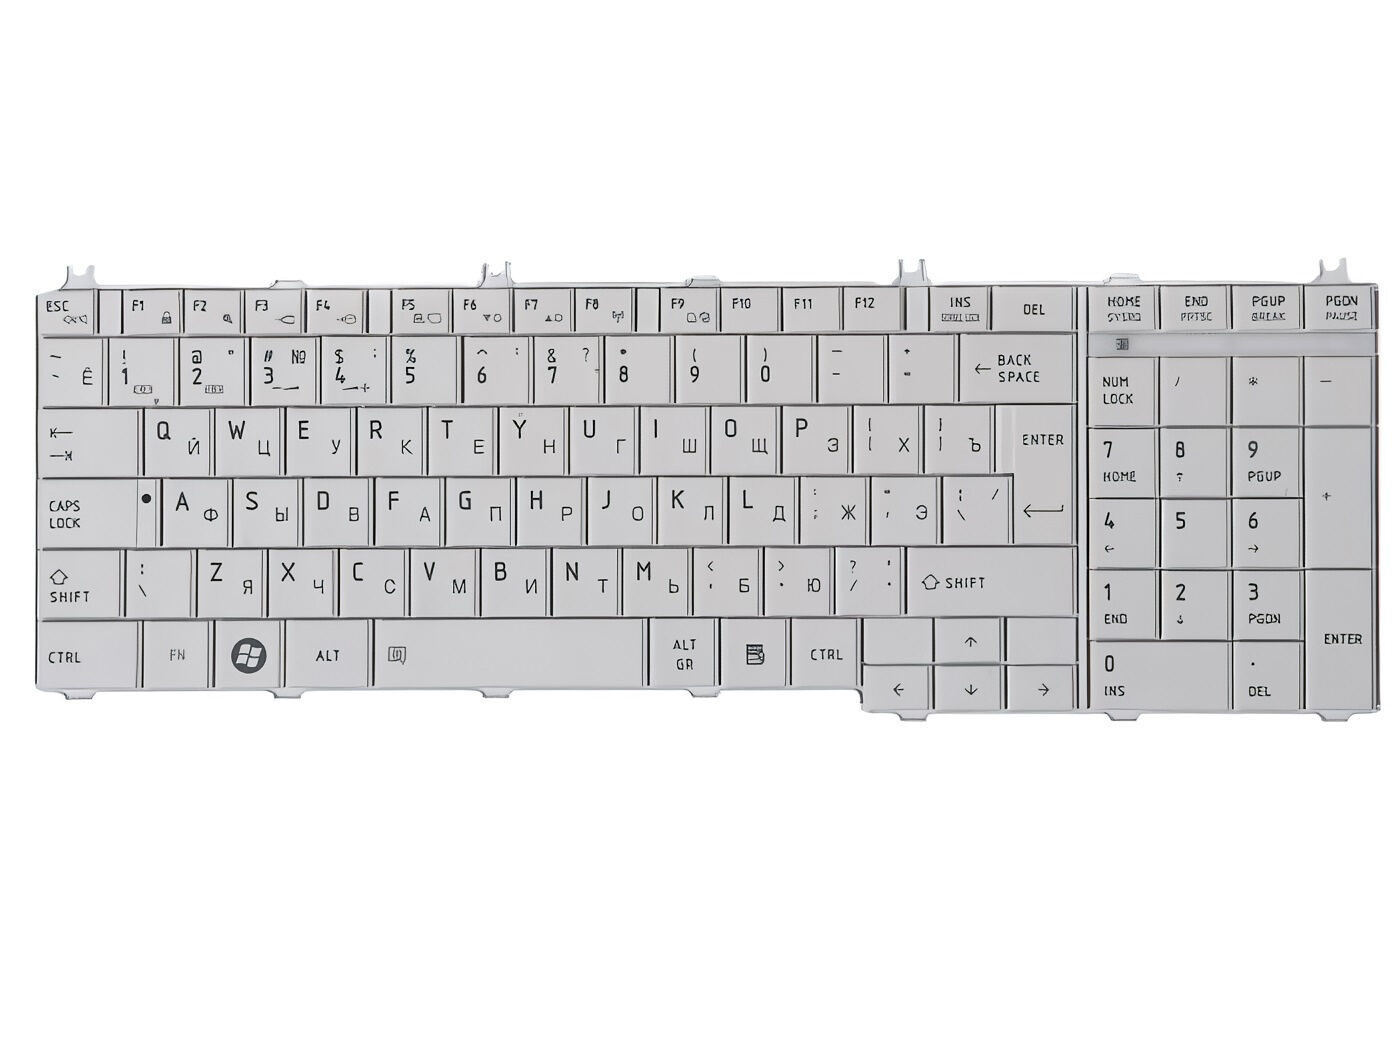 Клавиатура для ноутбука Toshiba C650 C660 L650 L750 белая p/n: NSK-TN00R, NSK-TN0SC, NSK-TN0SU